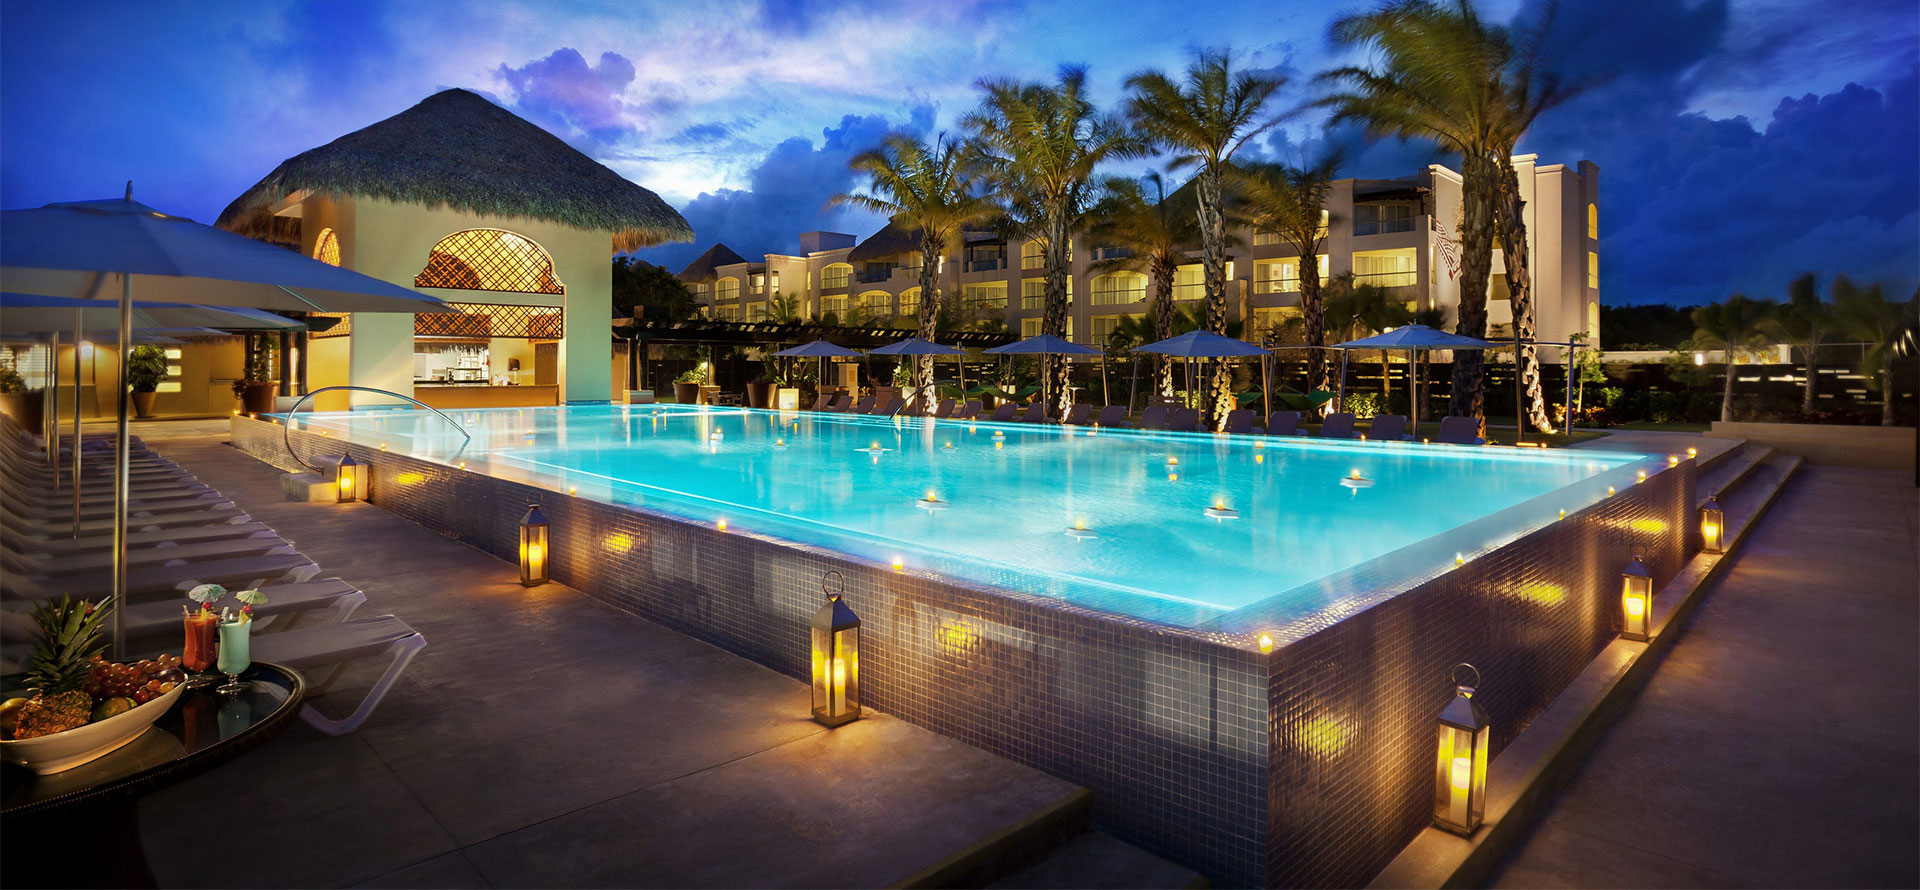 Punta cana honeymoon resort with pool.